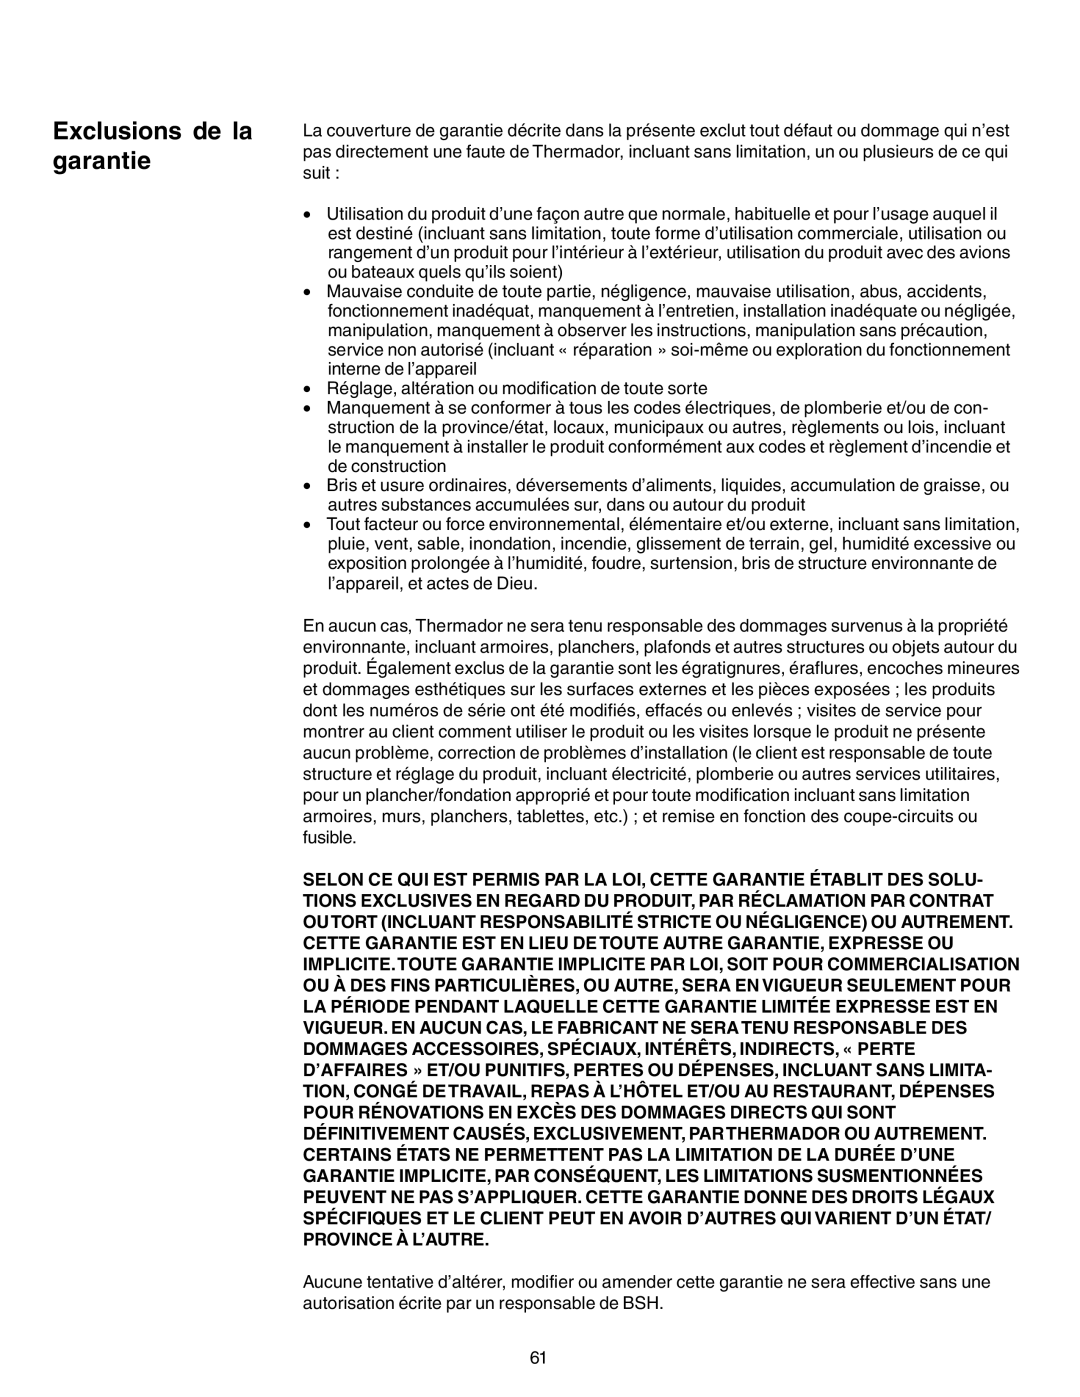 Thermador P24GE, PC30 manuel dutilisation Exclusions de la garantie 